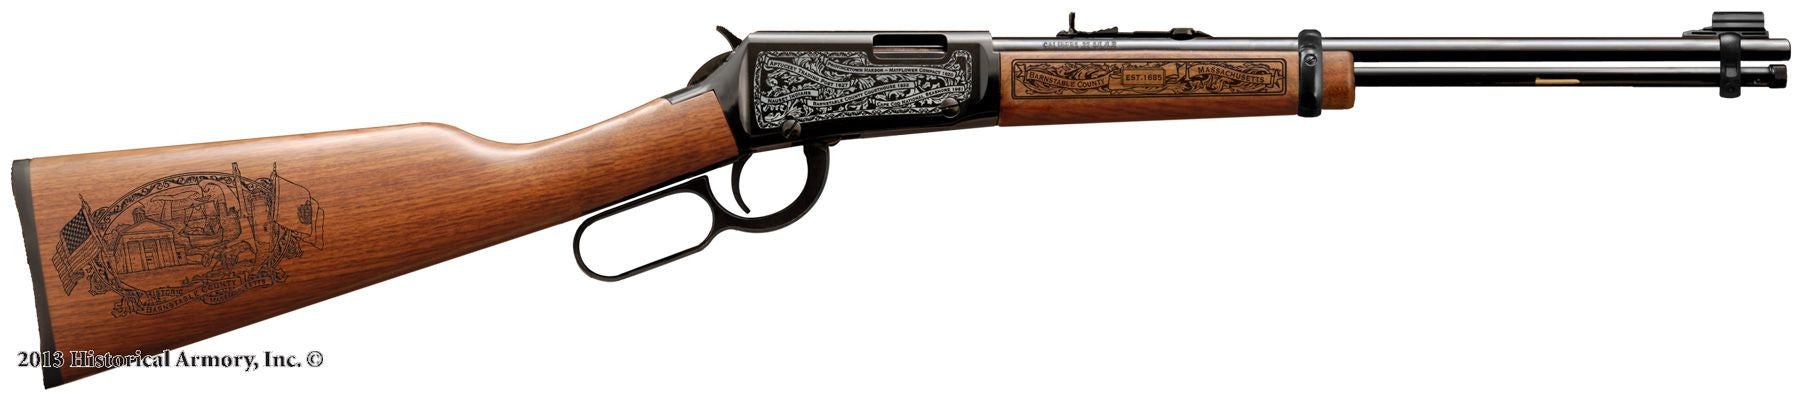 Barnstable county massachusetts engraved rifle H001